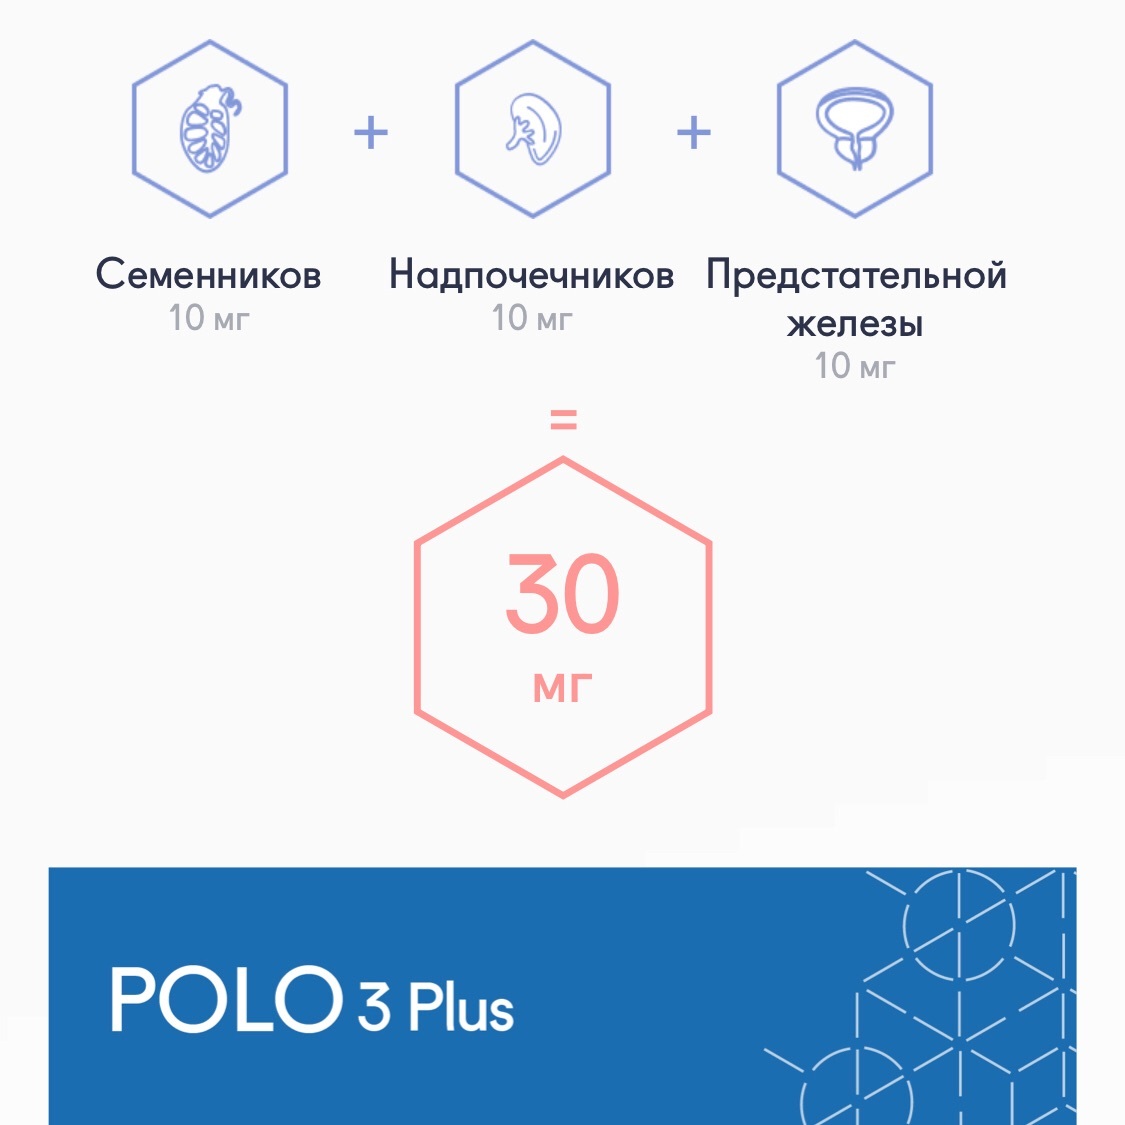 POLO 3 Plus® №20, пептиды Хавинсона от Витуаль. Аналог тестагена и Либидона